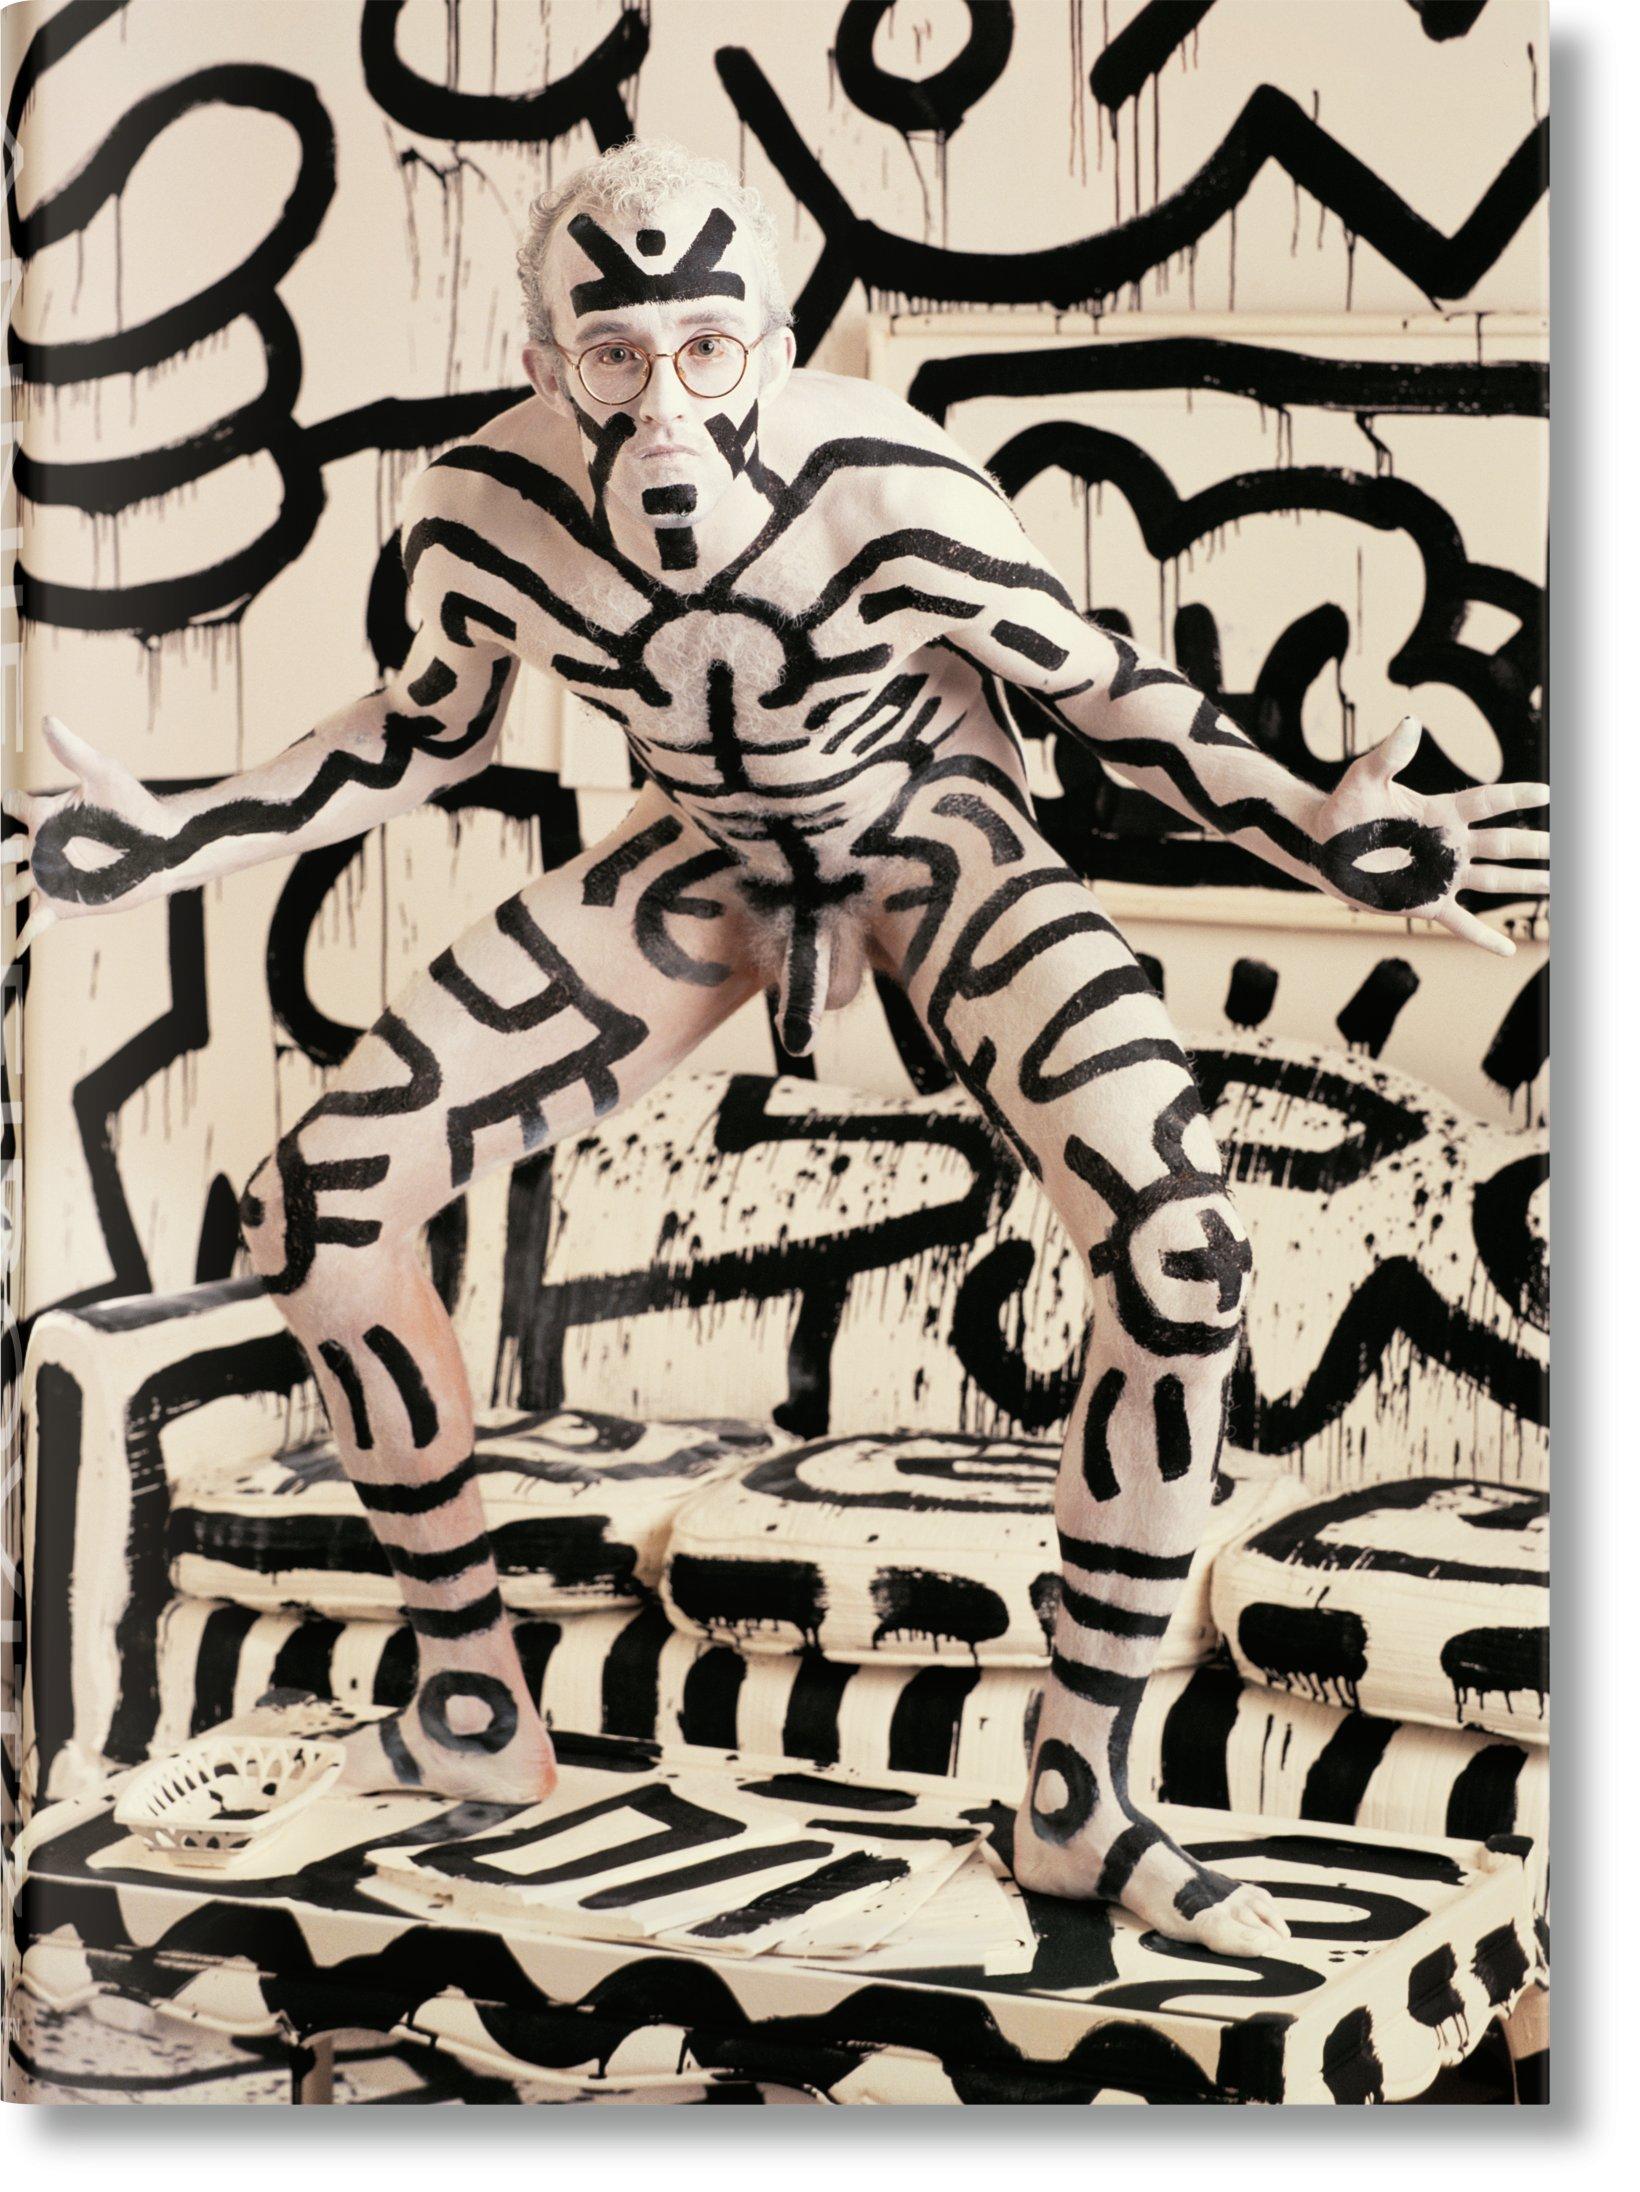 American Annie Leibovitz Sumo, Keith Haring Collector's Edition